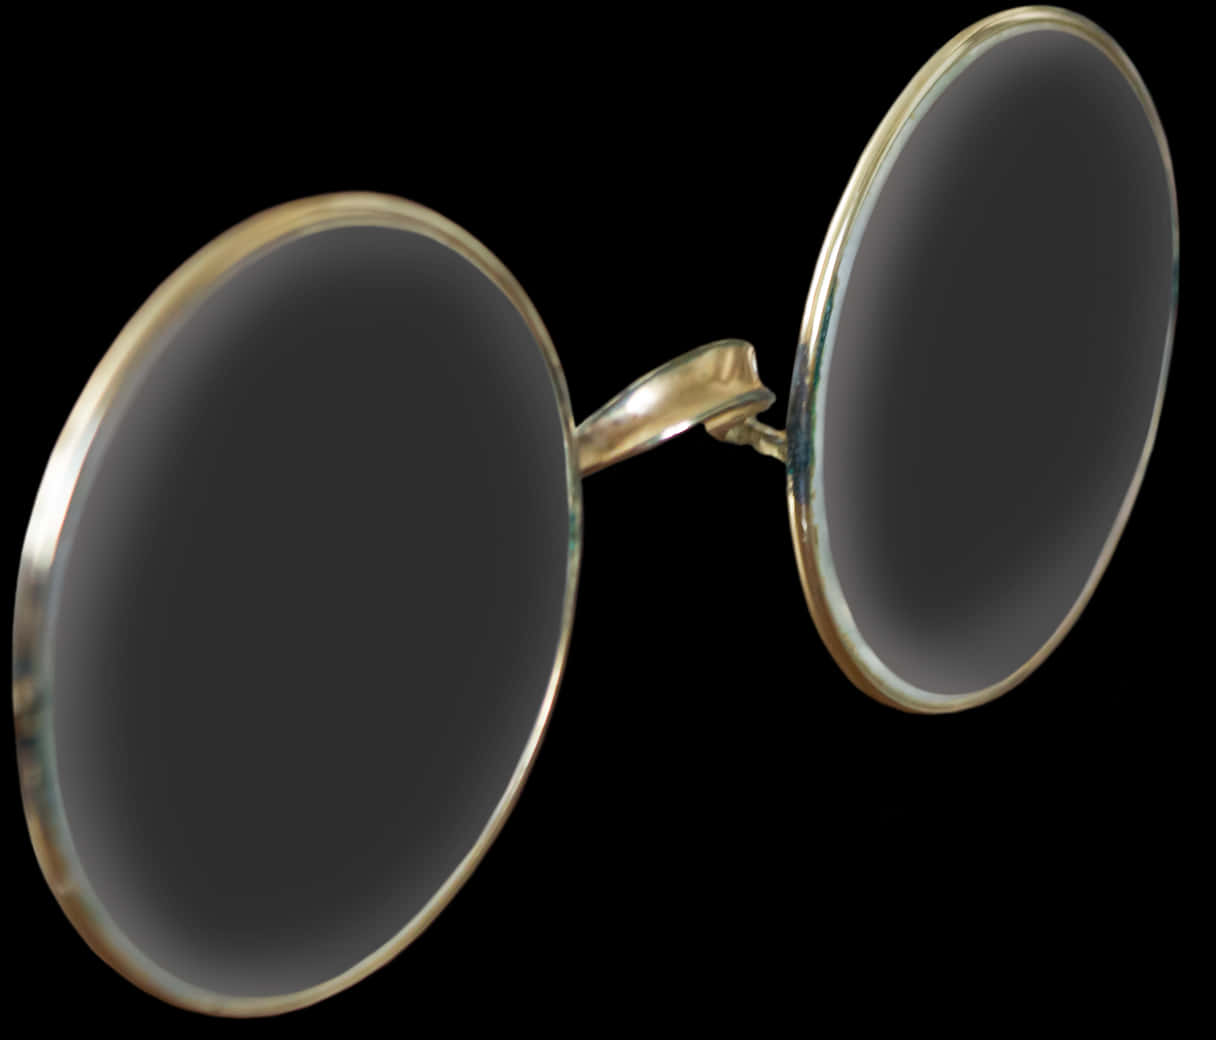 A Pair Of Round Sunglasses